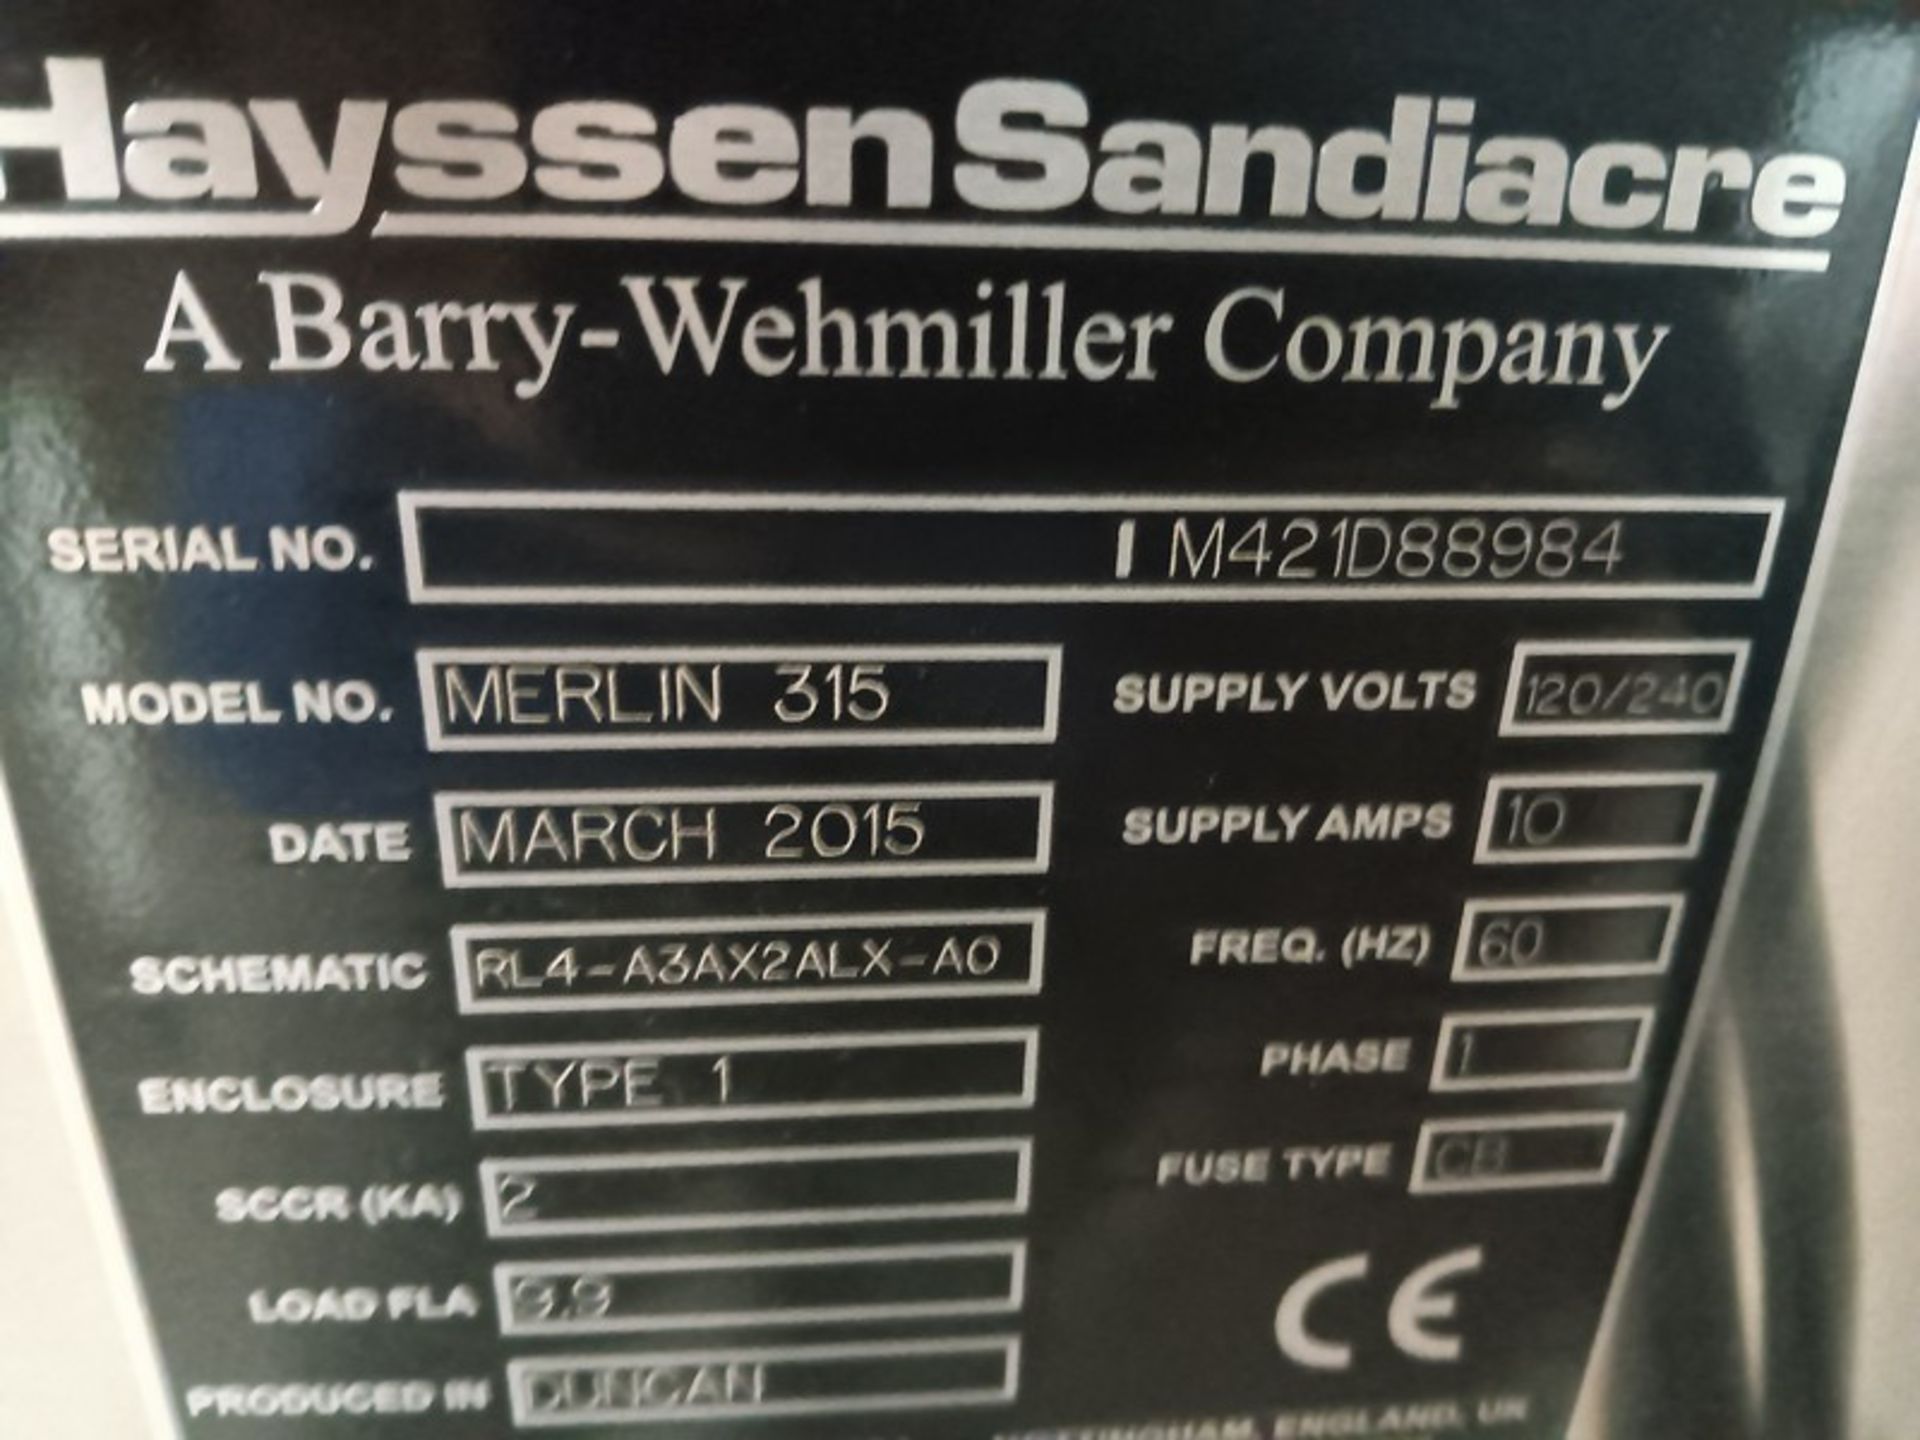 Hayssen Syndicate Merlin S/S Flow Wrapper, Model 315, S/N M421DSS984, Year 2015, Volt 120/240, - Image 9 of 9